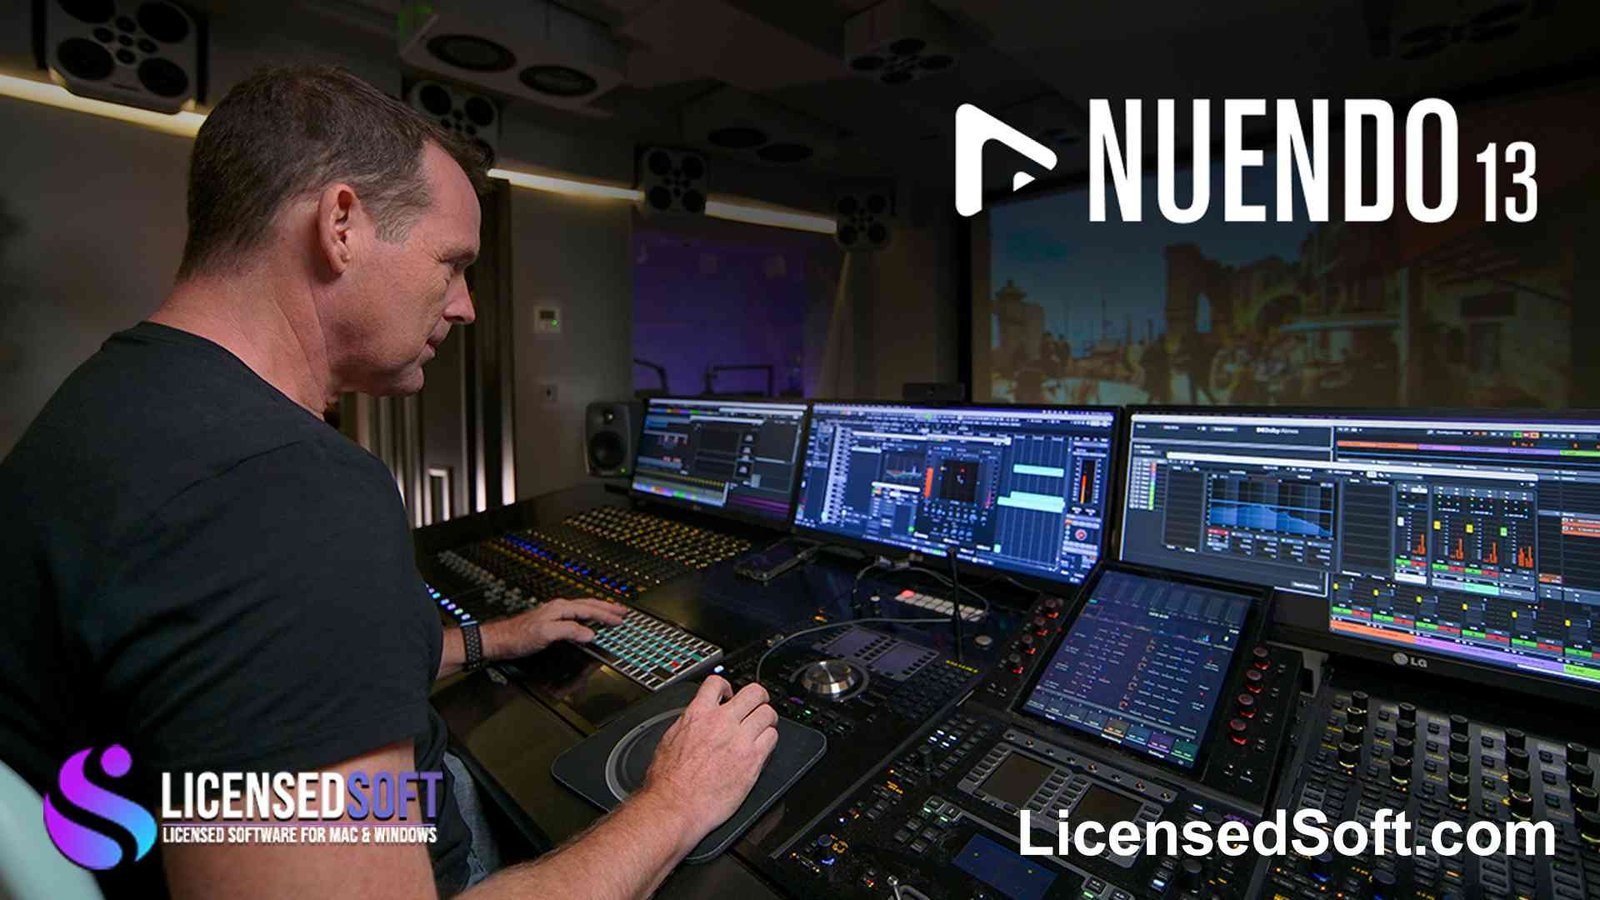 Steinberg Nuendo 13 Perpetual License By LicensedSoft